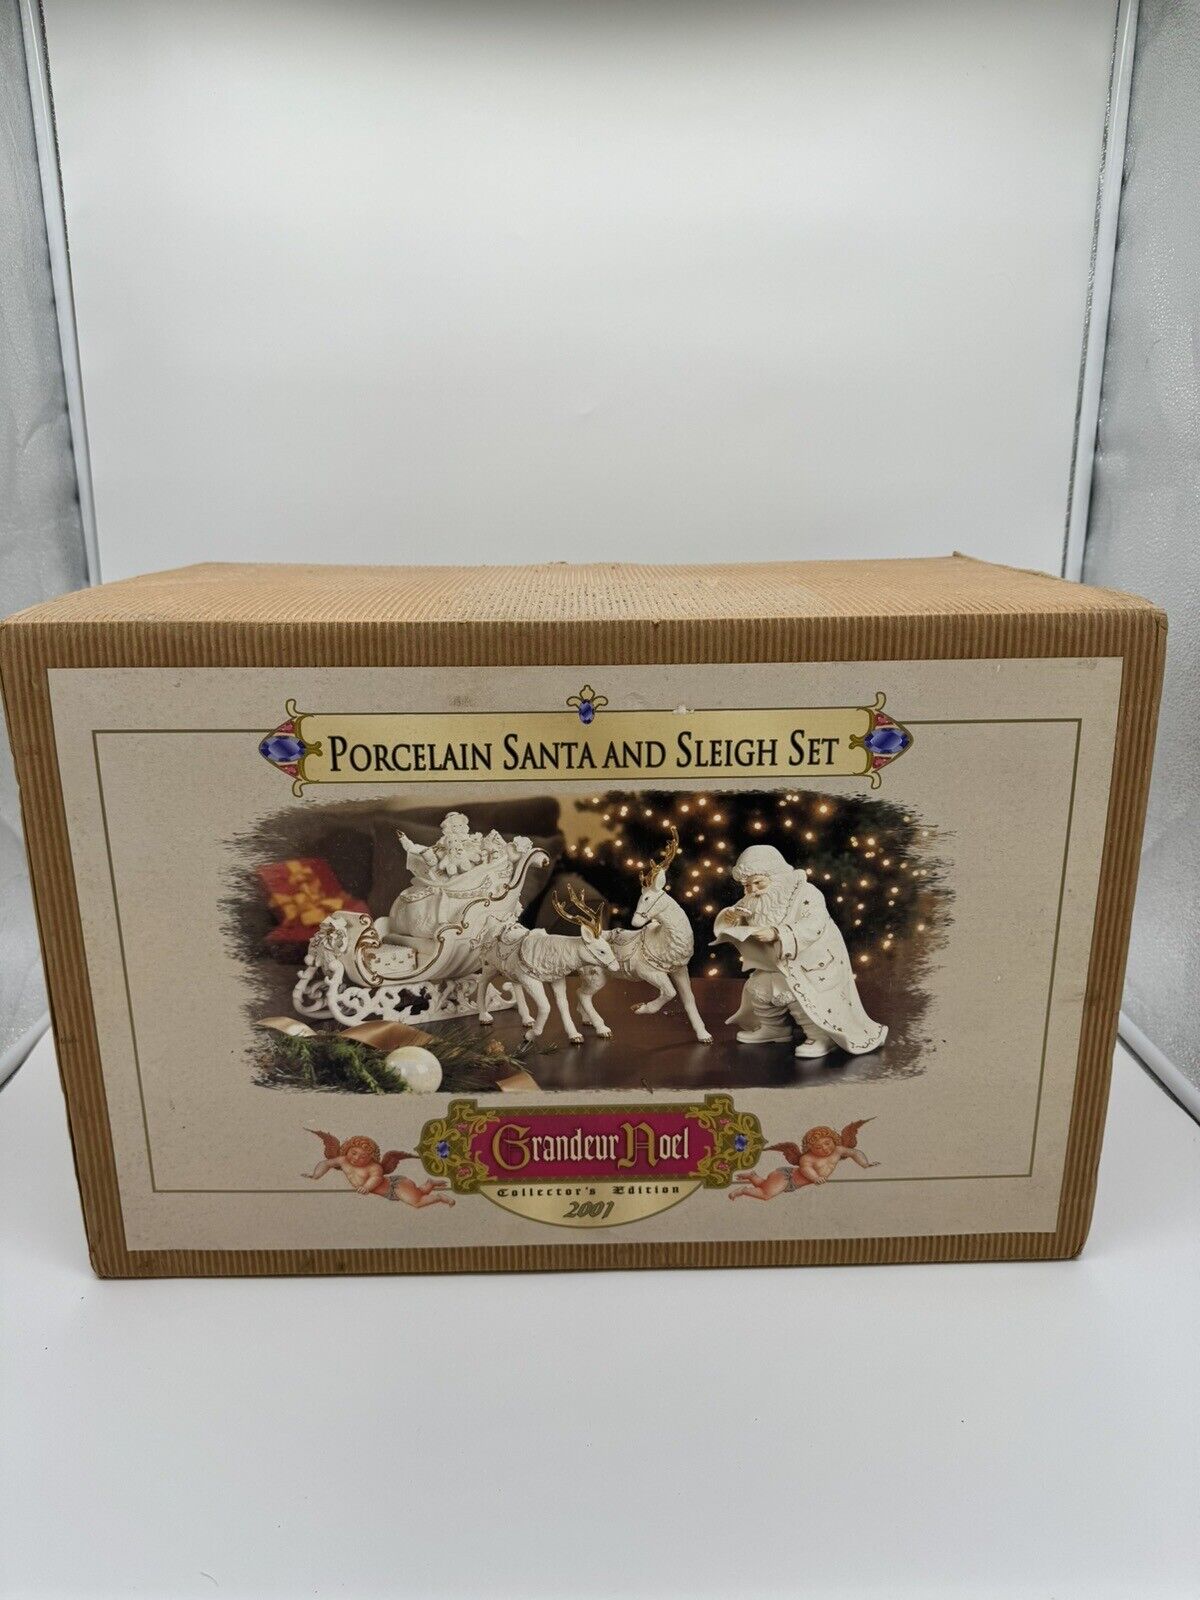 Grandeur Porcelain Santa and Sleigh Set w/ Reindeer 2001 Collectors Edition NEW